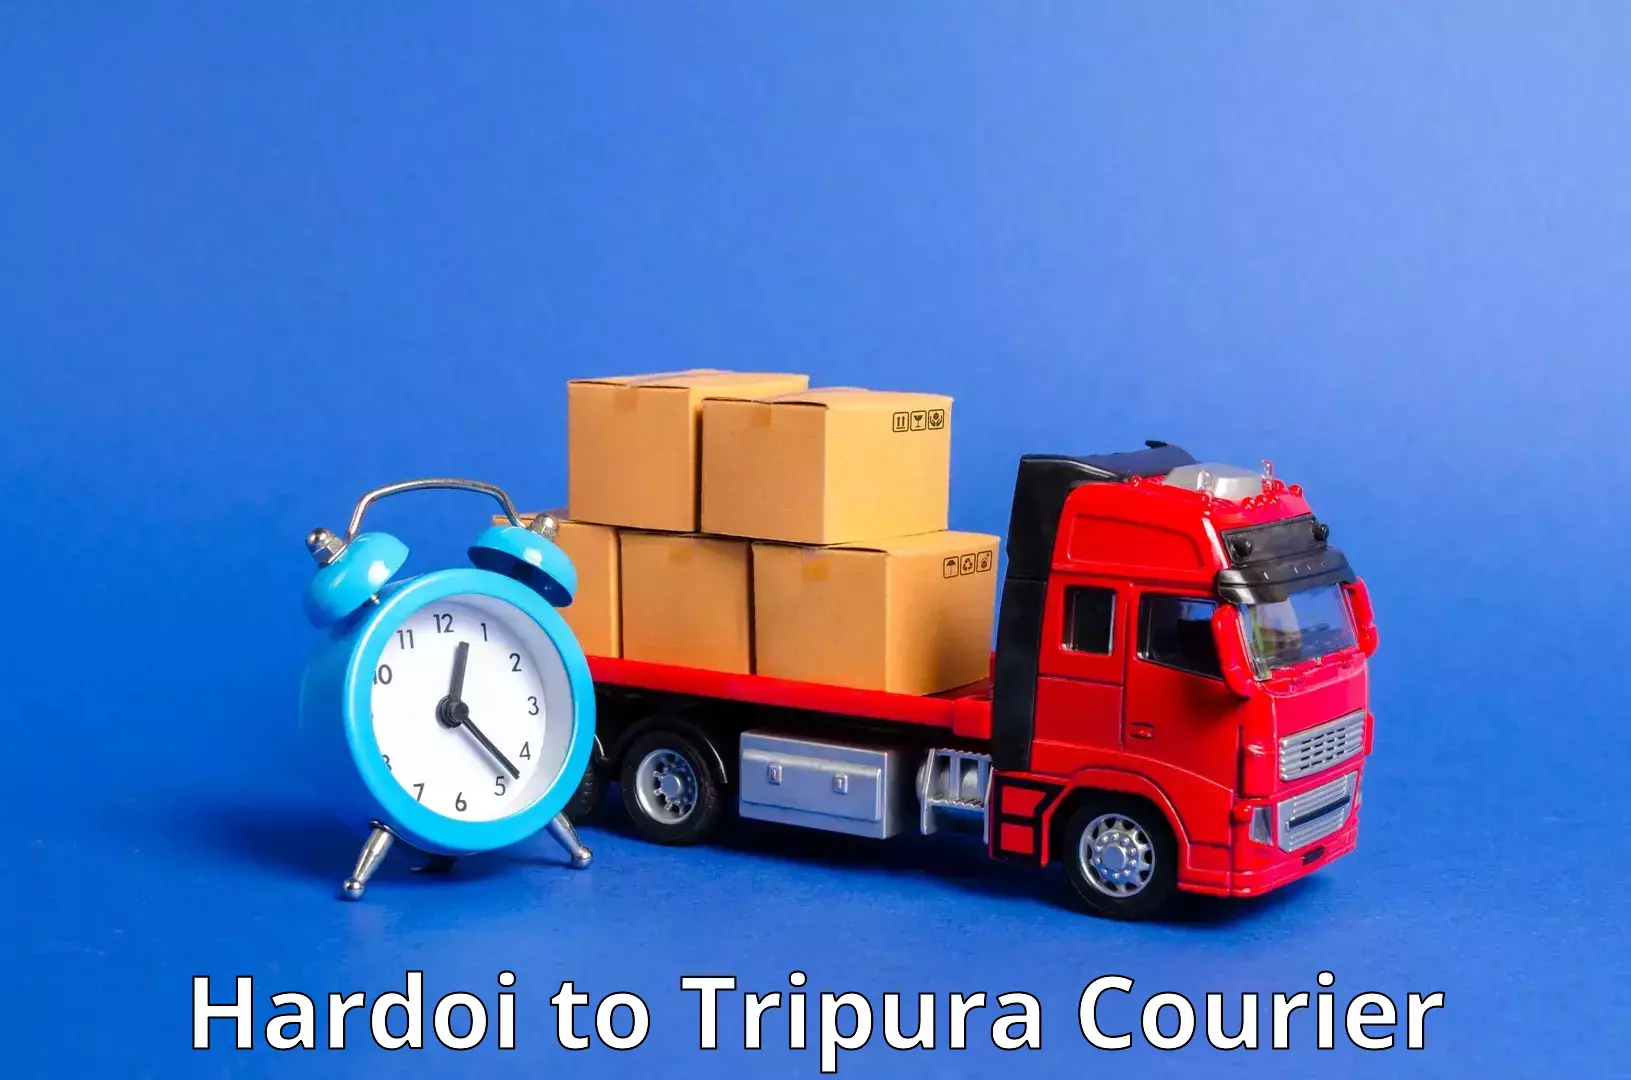 24-hour courier service Hardoi to Udaipur Tripura